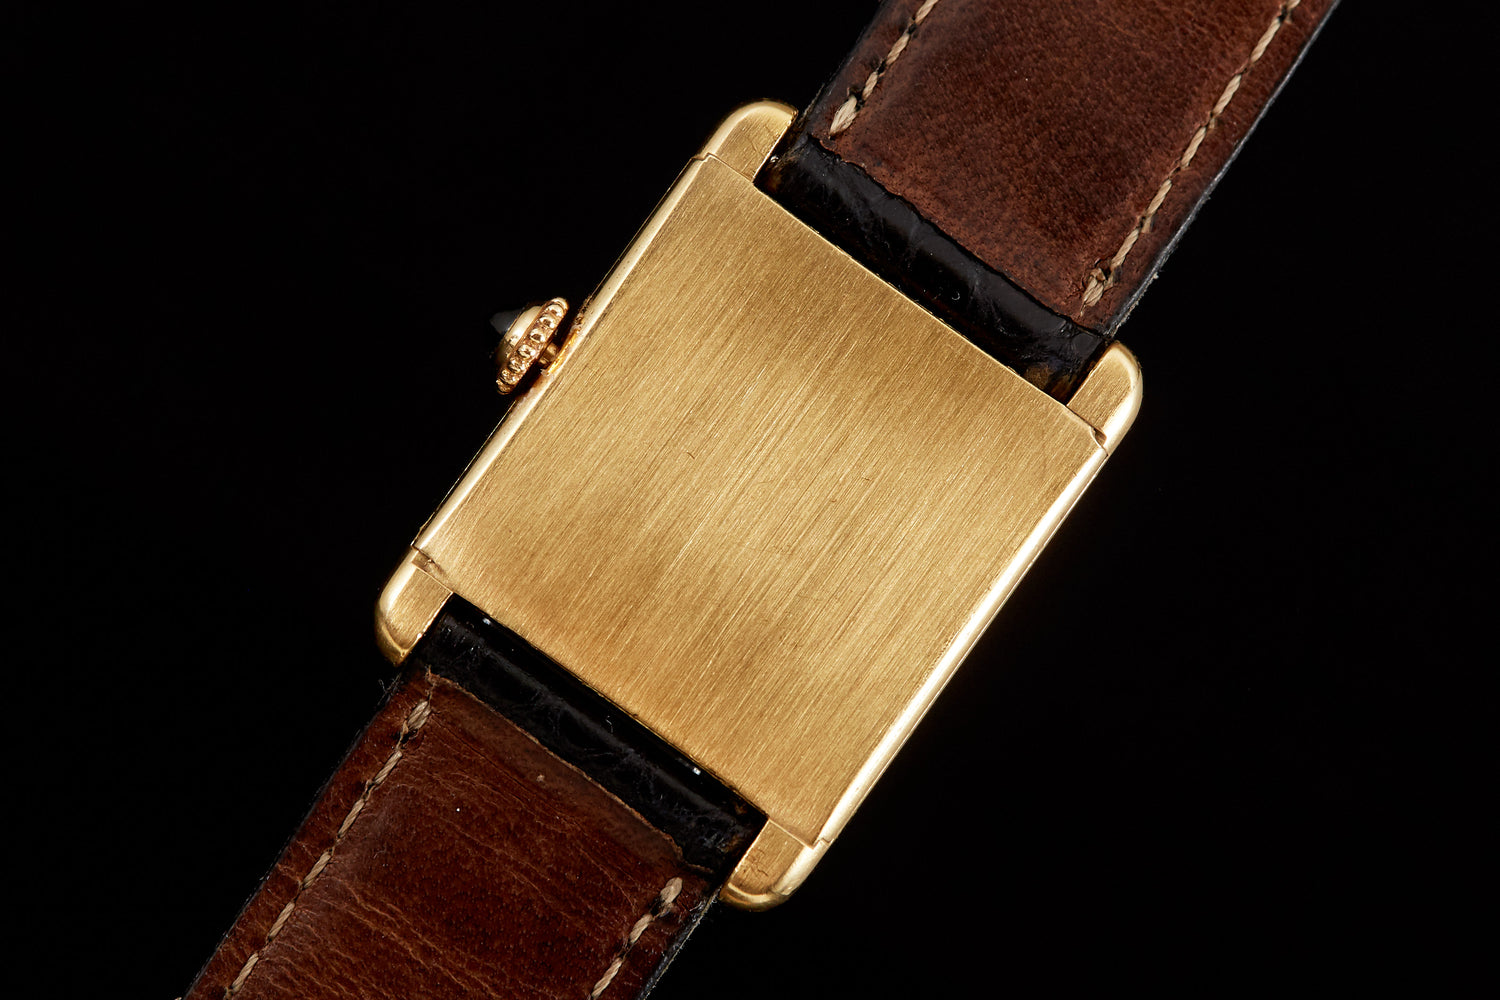 CRWGTA0023 - Tank Louis Cartier watch - Small model, hand-wound